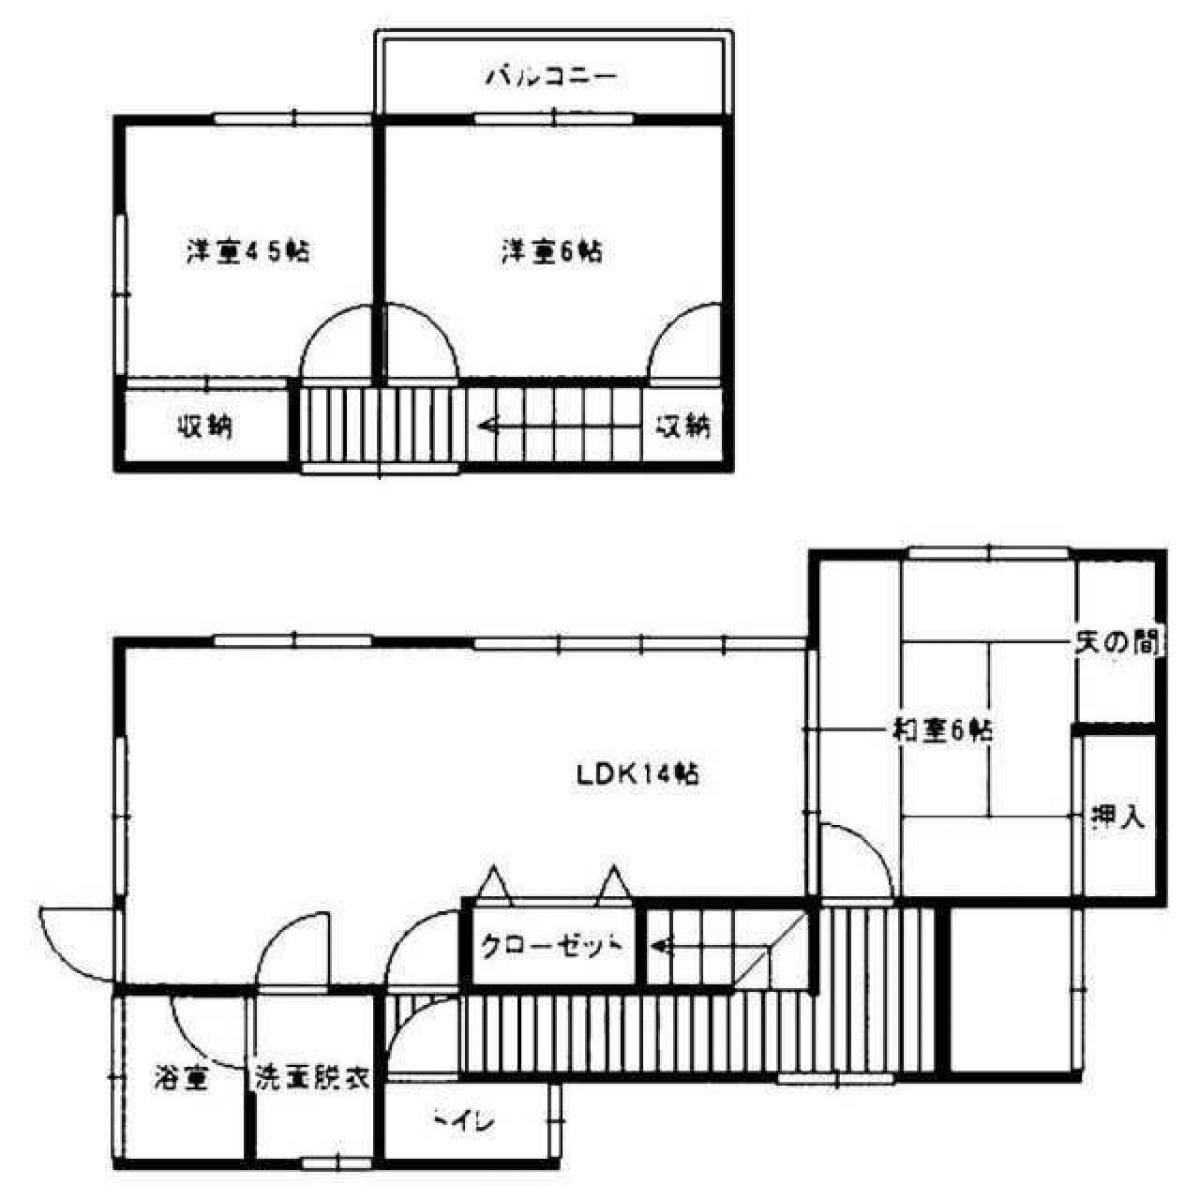 Picture of Home For Sale in Yukuhashi Shi, Fukuoka, Japan